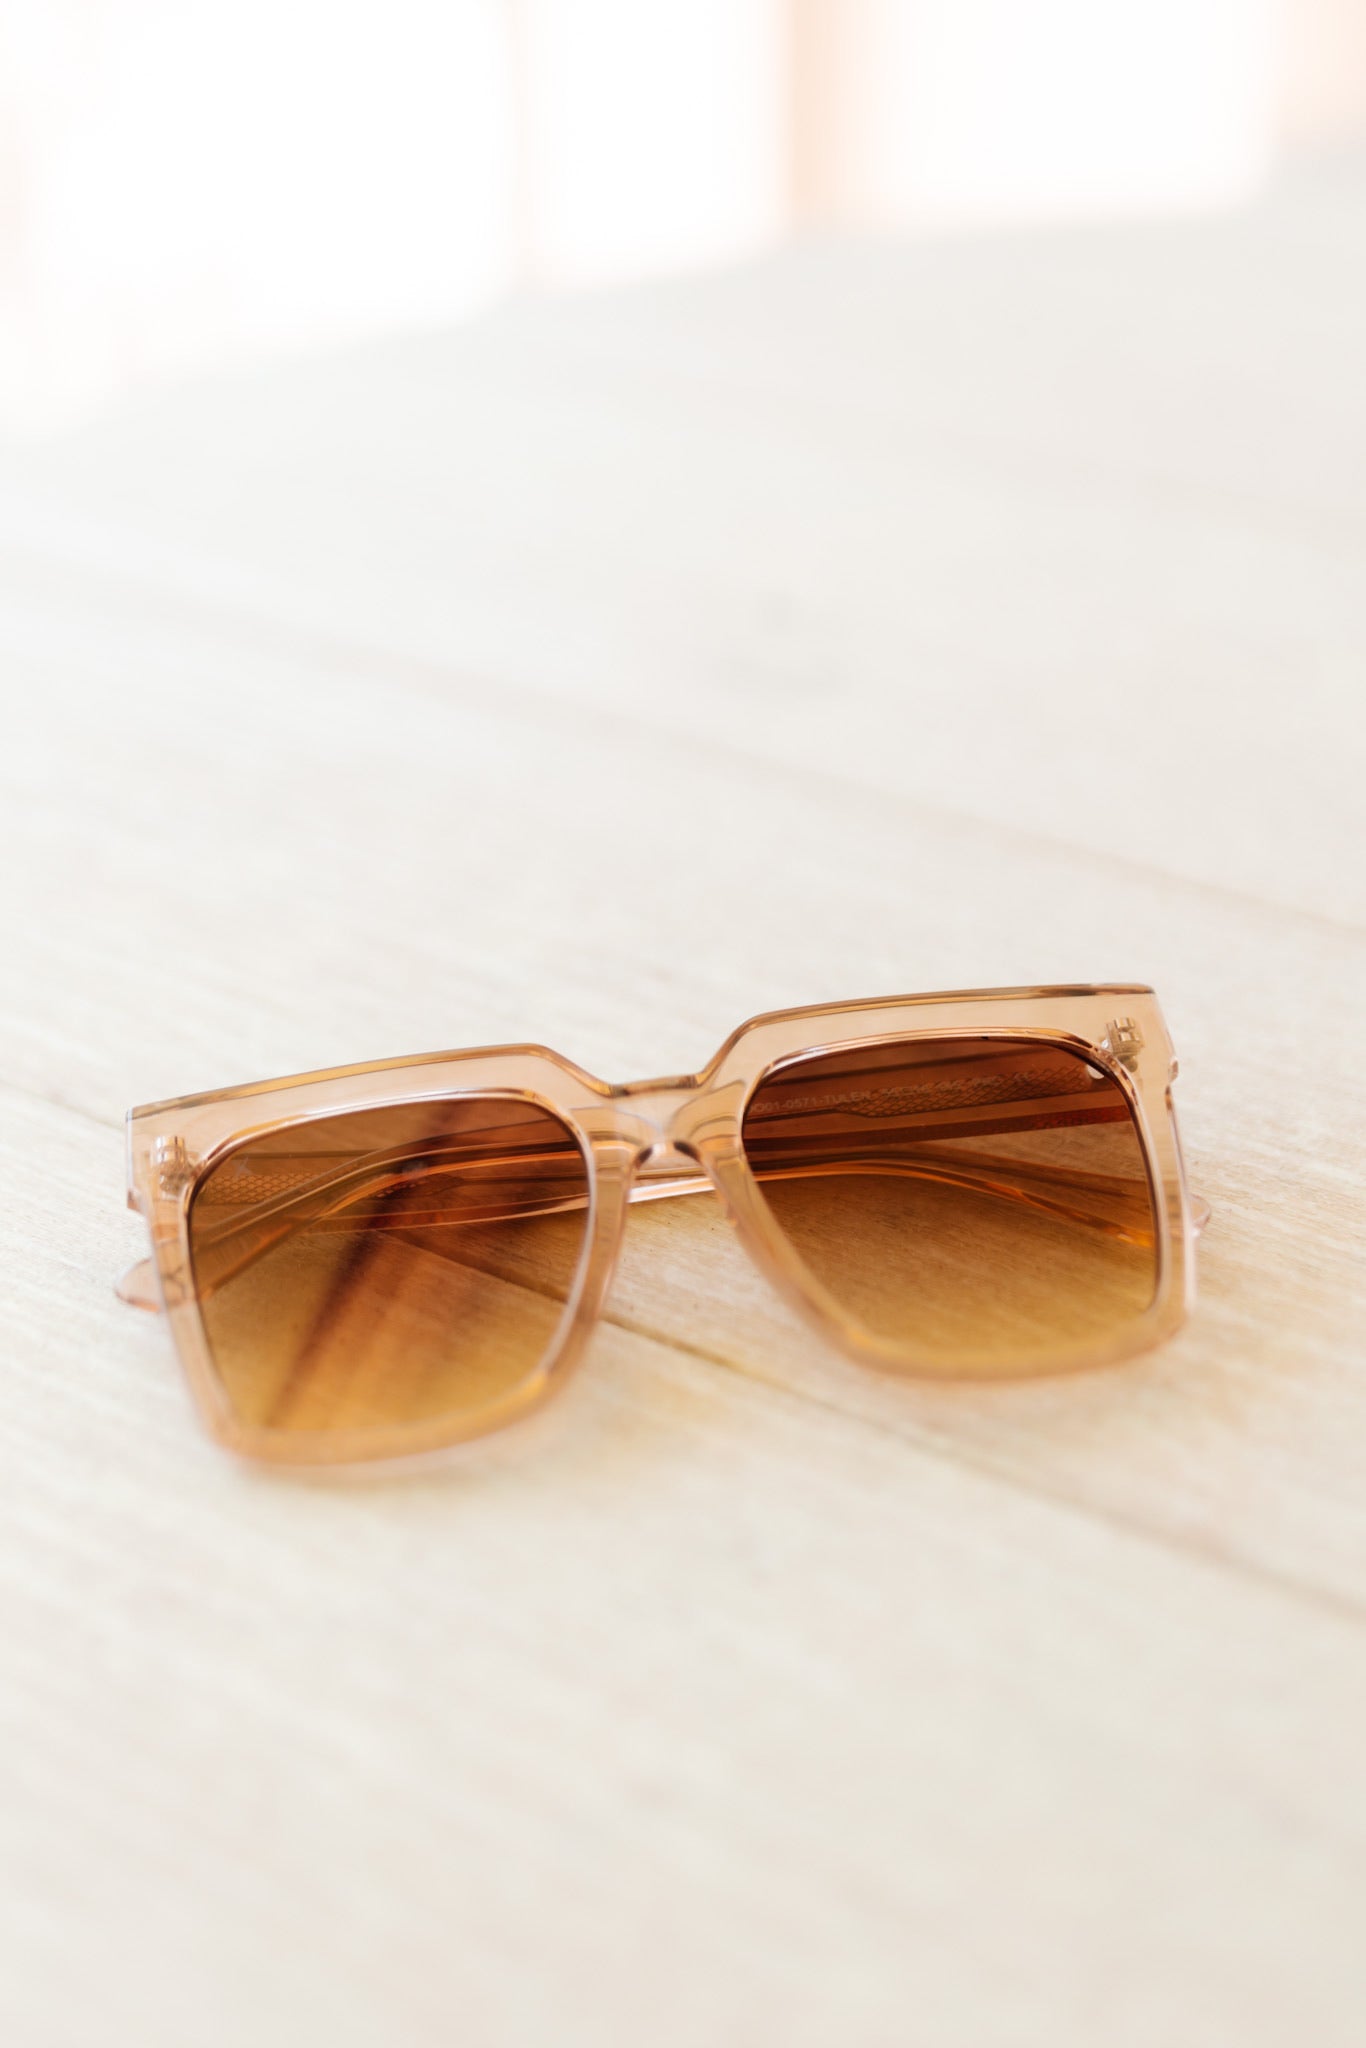 Dime Eyewear Topanga Translucent Light Brown Frame and Gradient Flash Sunglasses